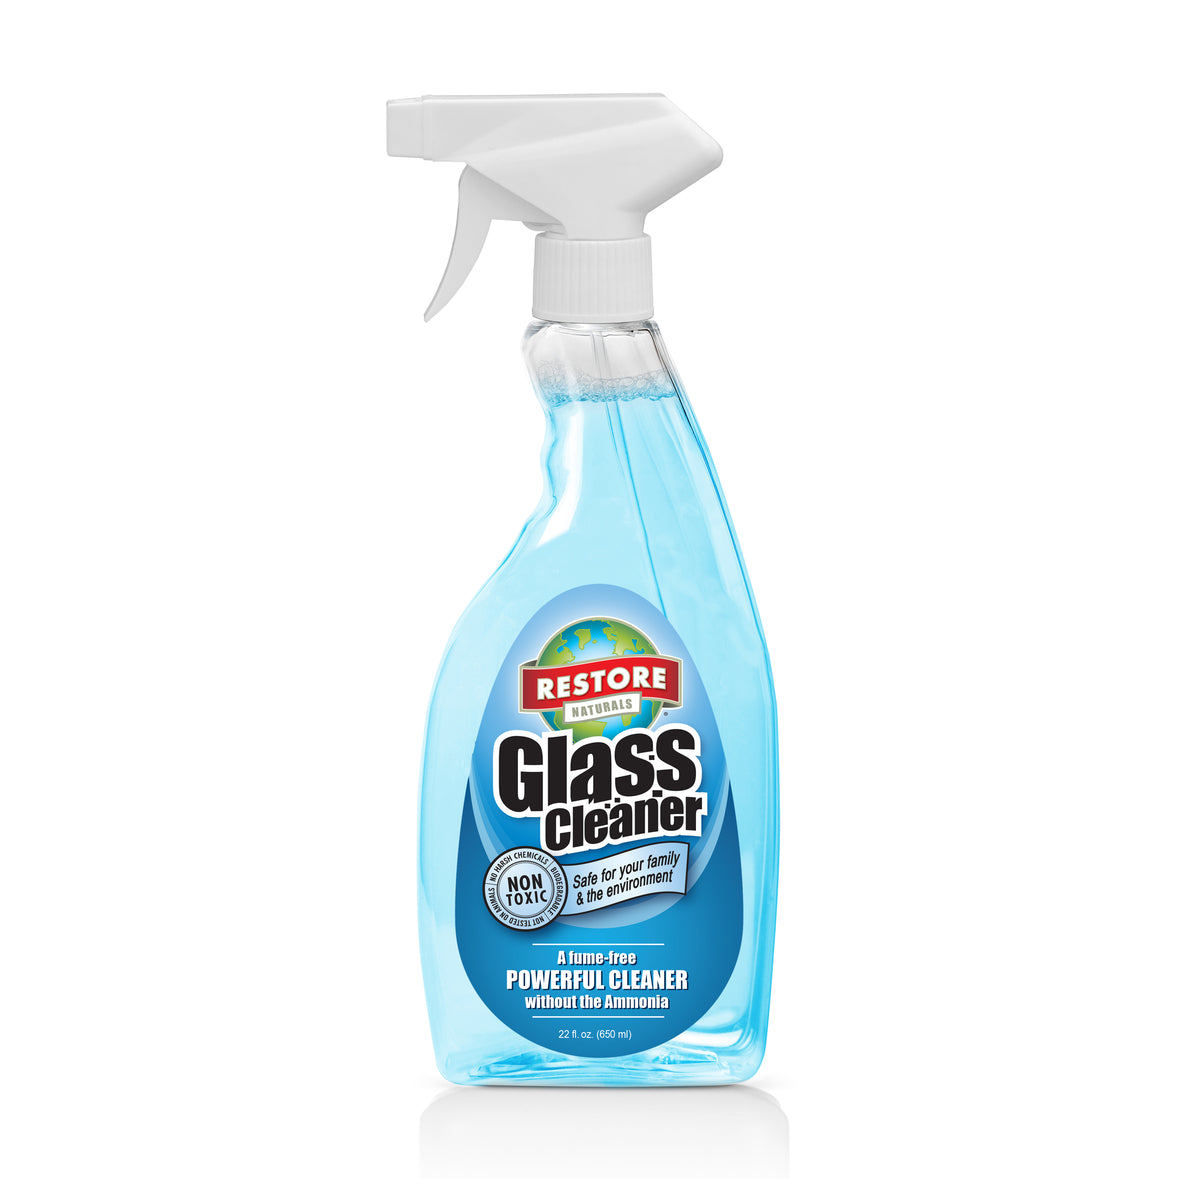 WINDEX® GLASS CLEANERS Spray